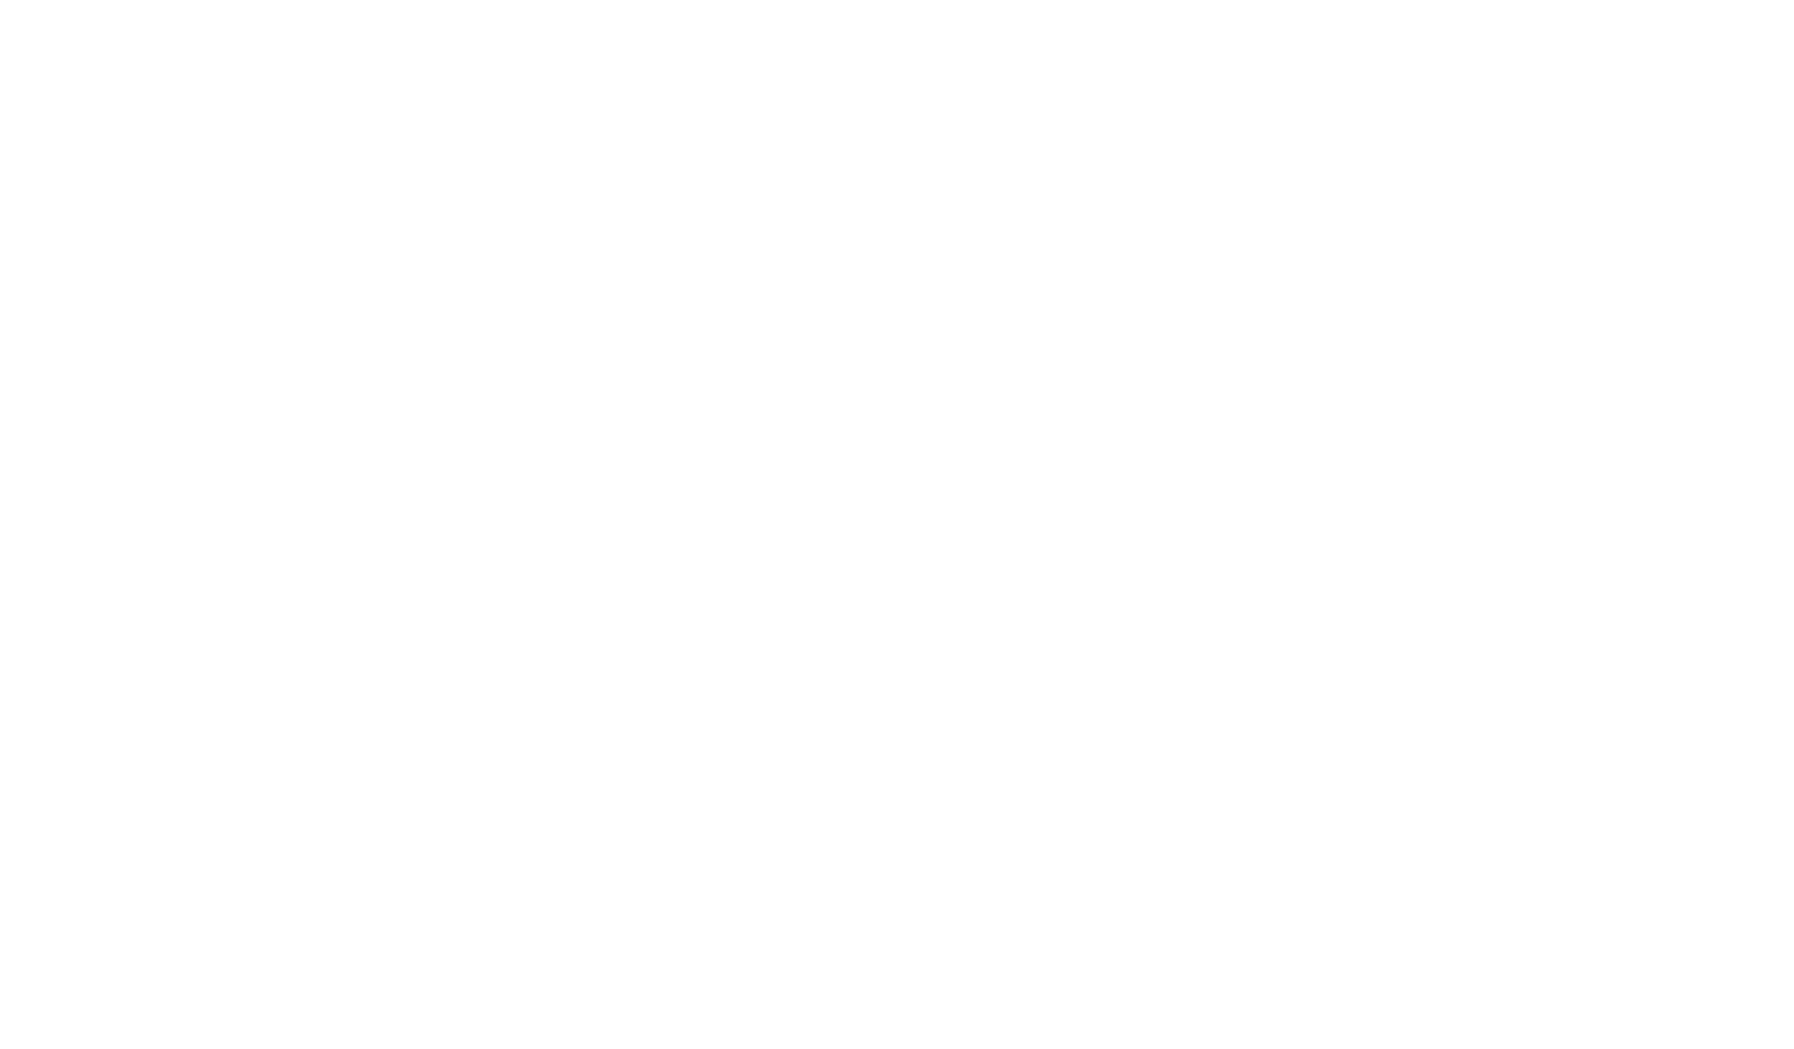 Josh's logo